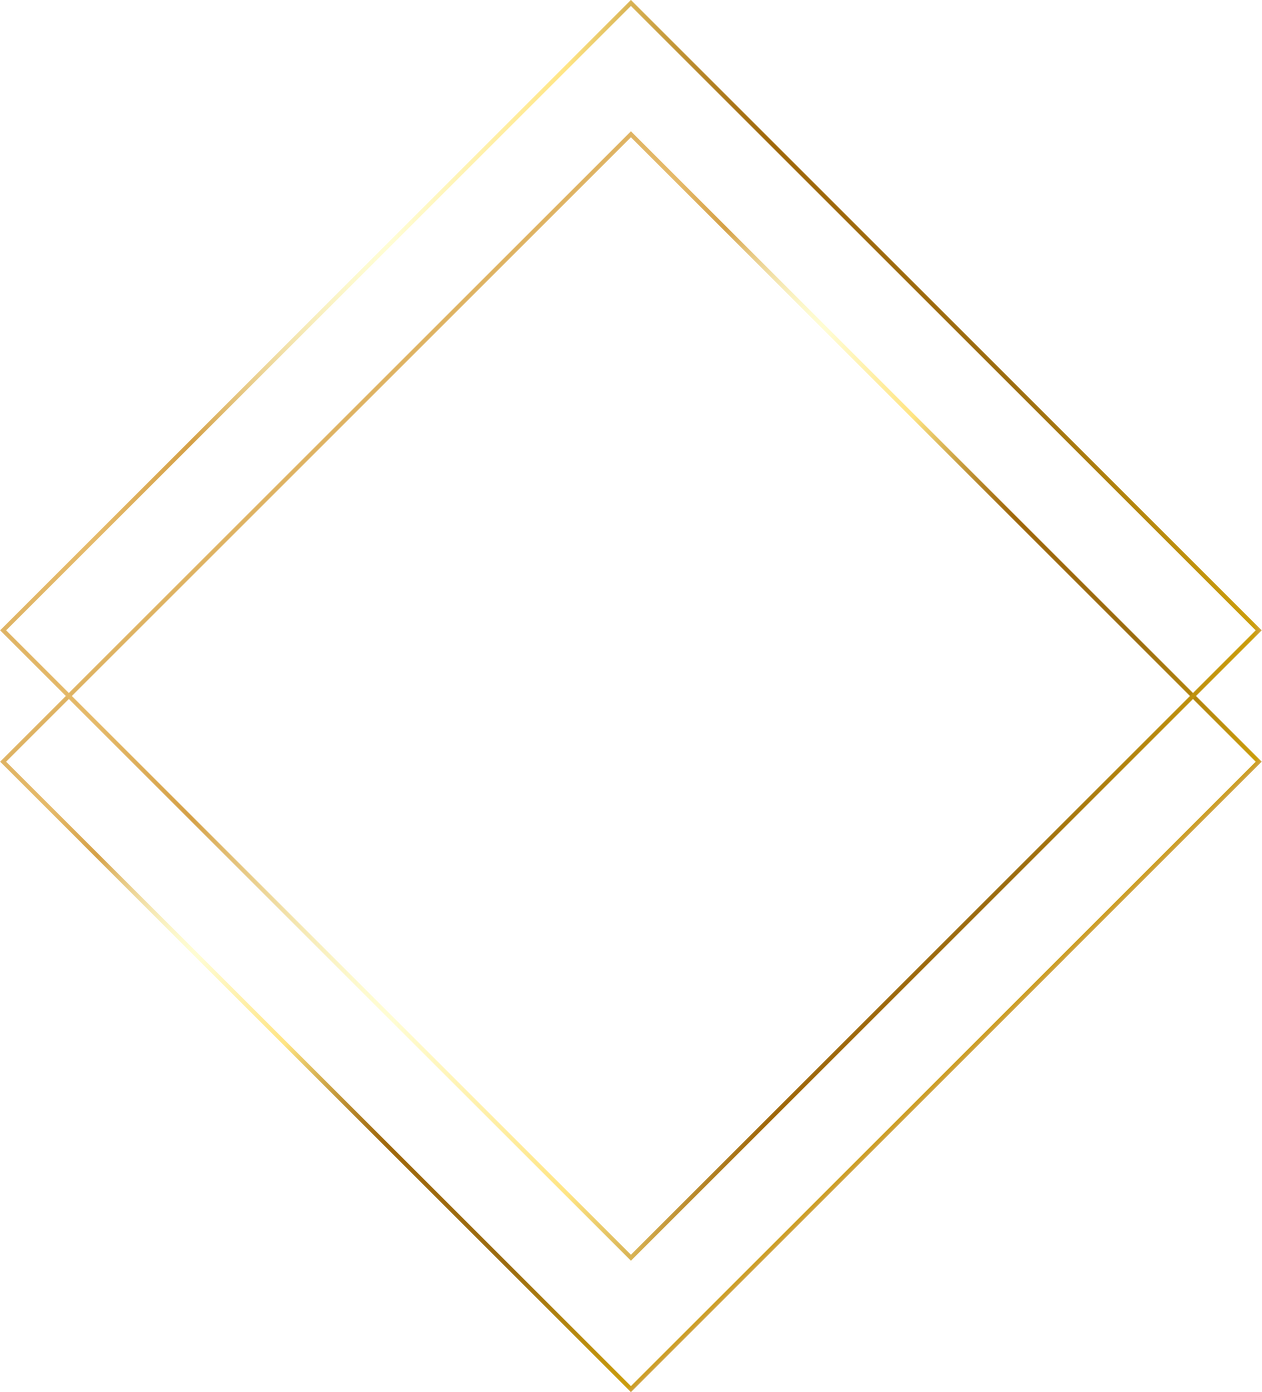 Geometric gold frame